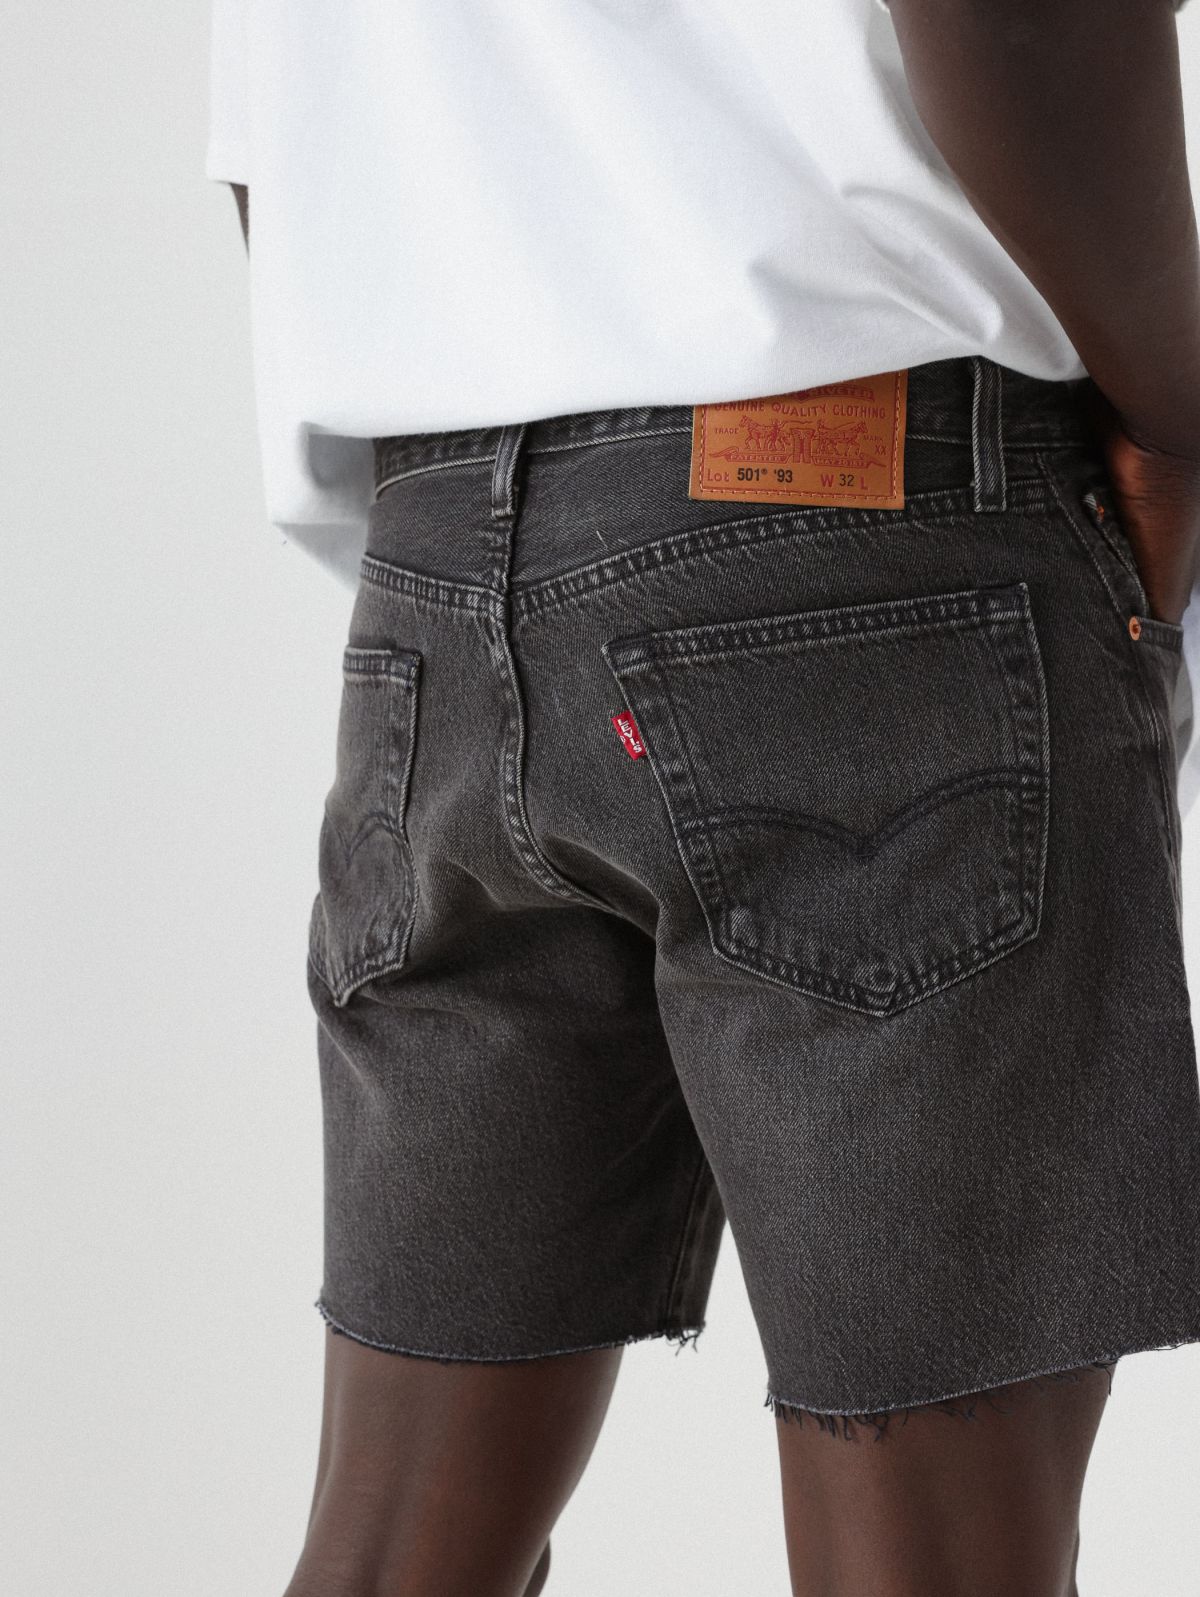  ג'ינס קצר עם לוגו של LEVIS